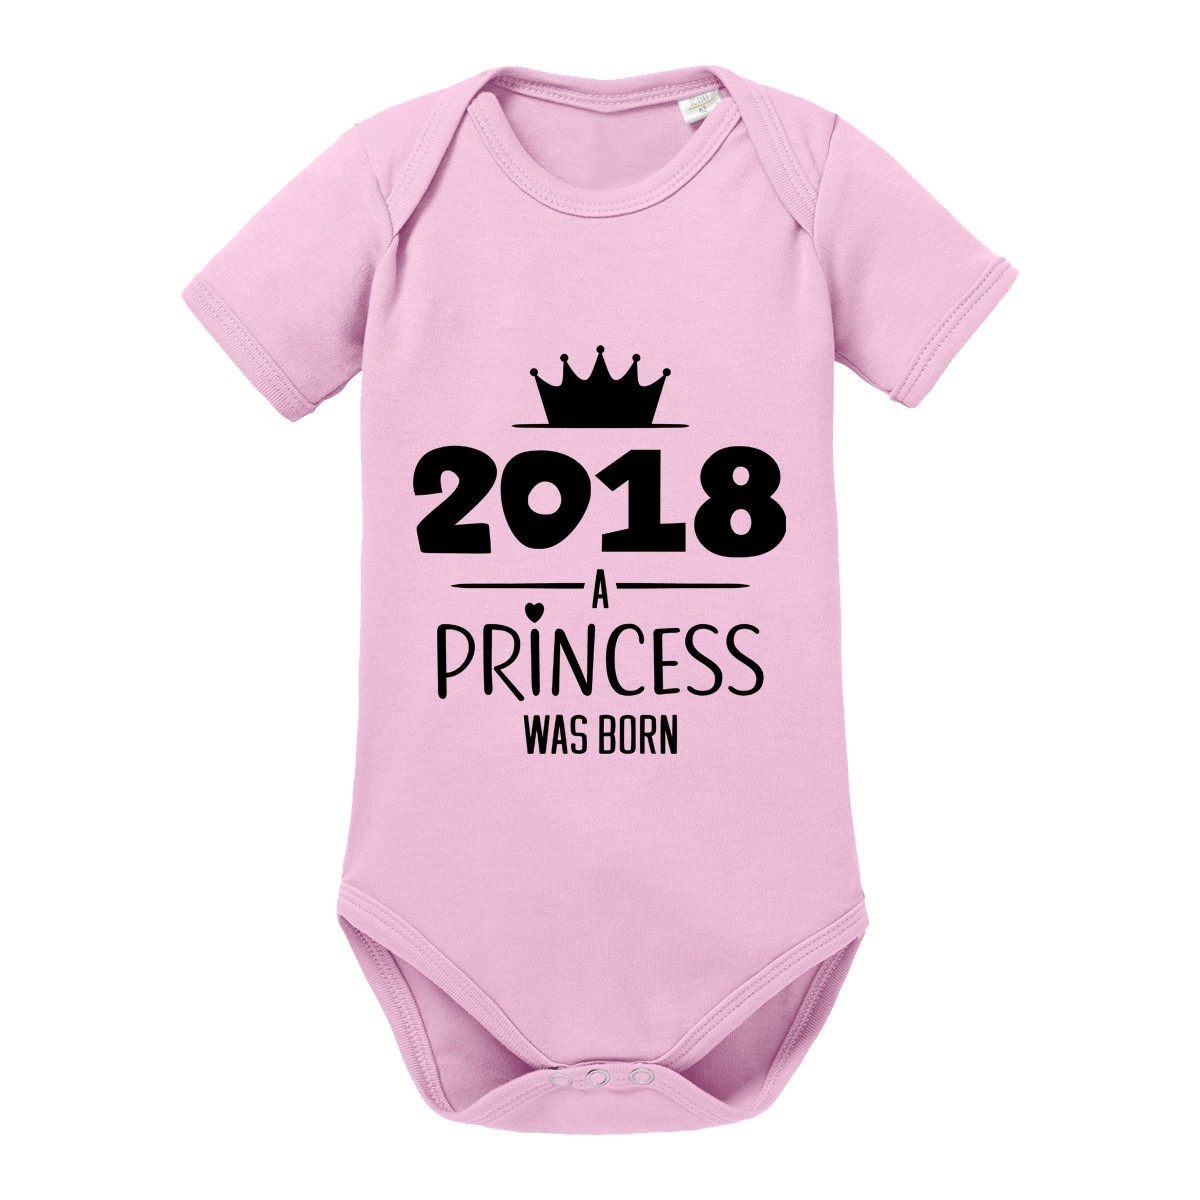 Babybody Modell: 2018 a princess was born